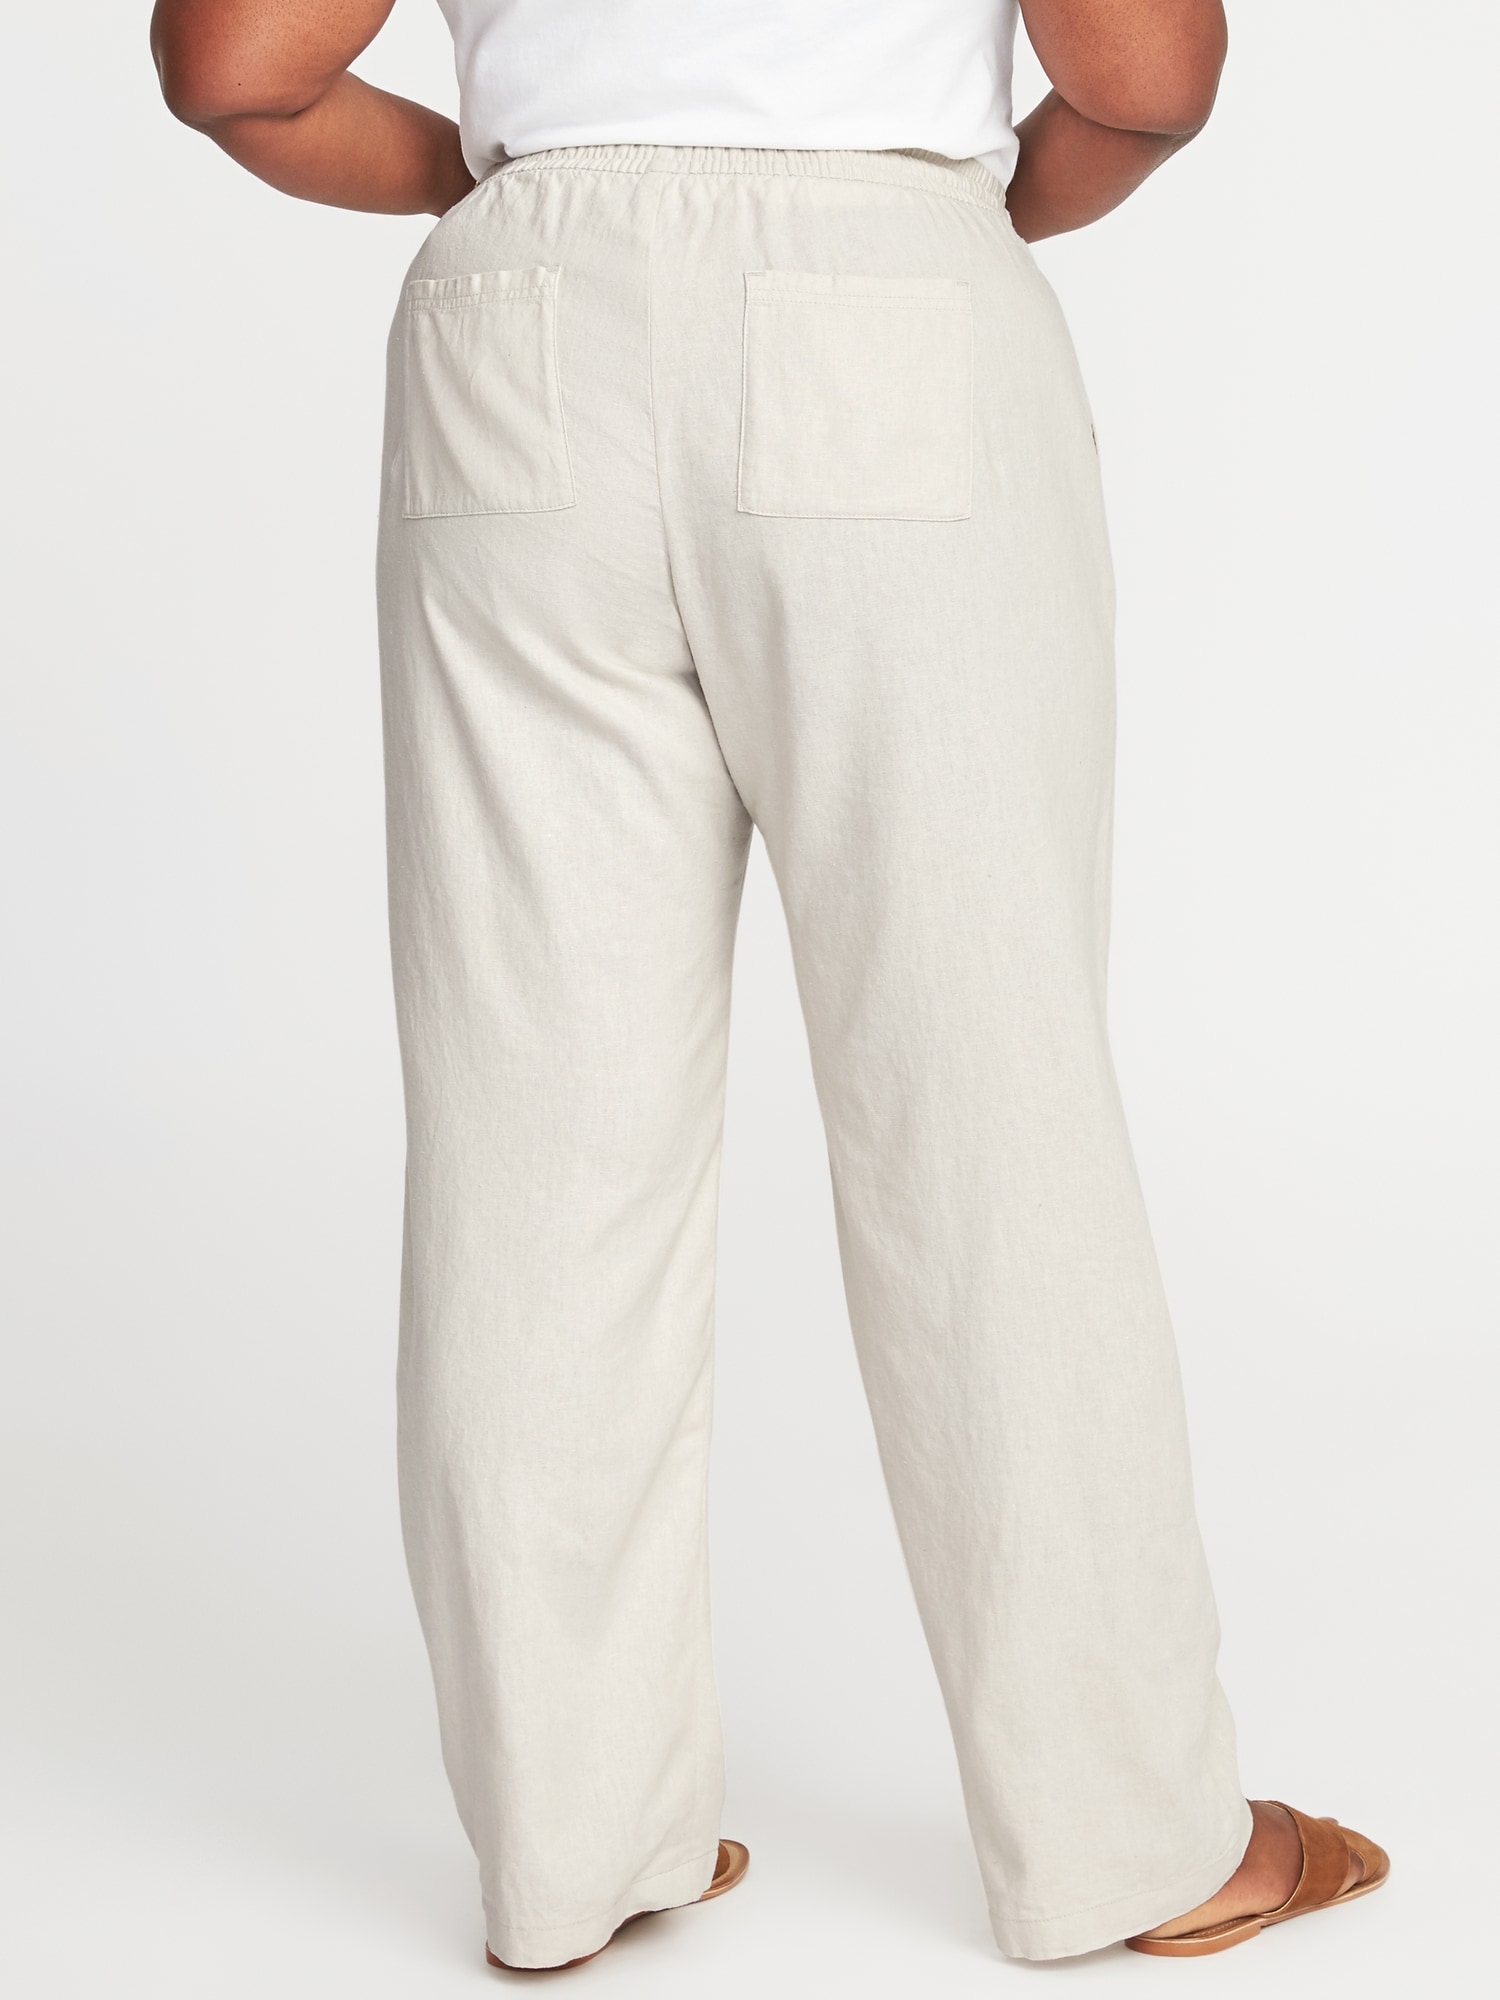 Lauren Ralph Lauren Woman ZIAKASH FULL LENGTH FLAT FRONT - Trousers -  white/off-white - Zalando.de